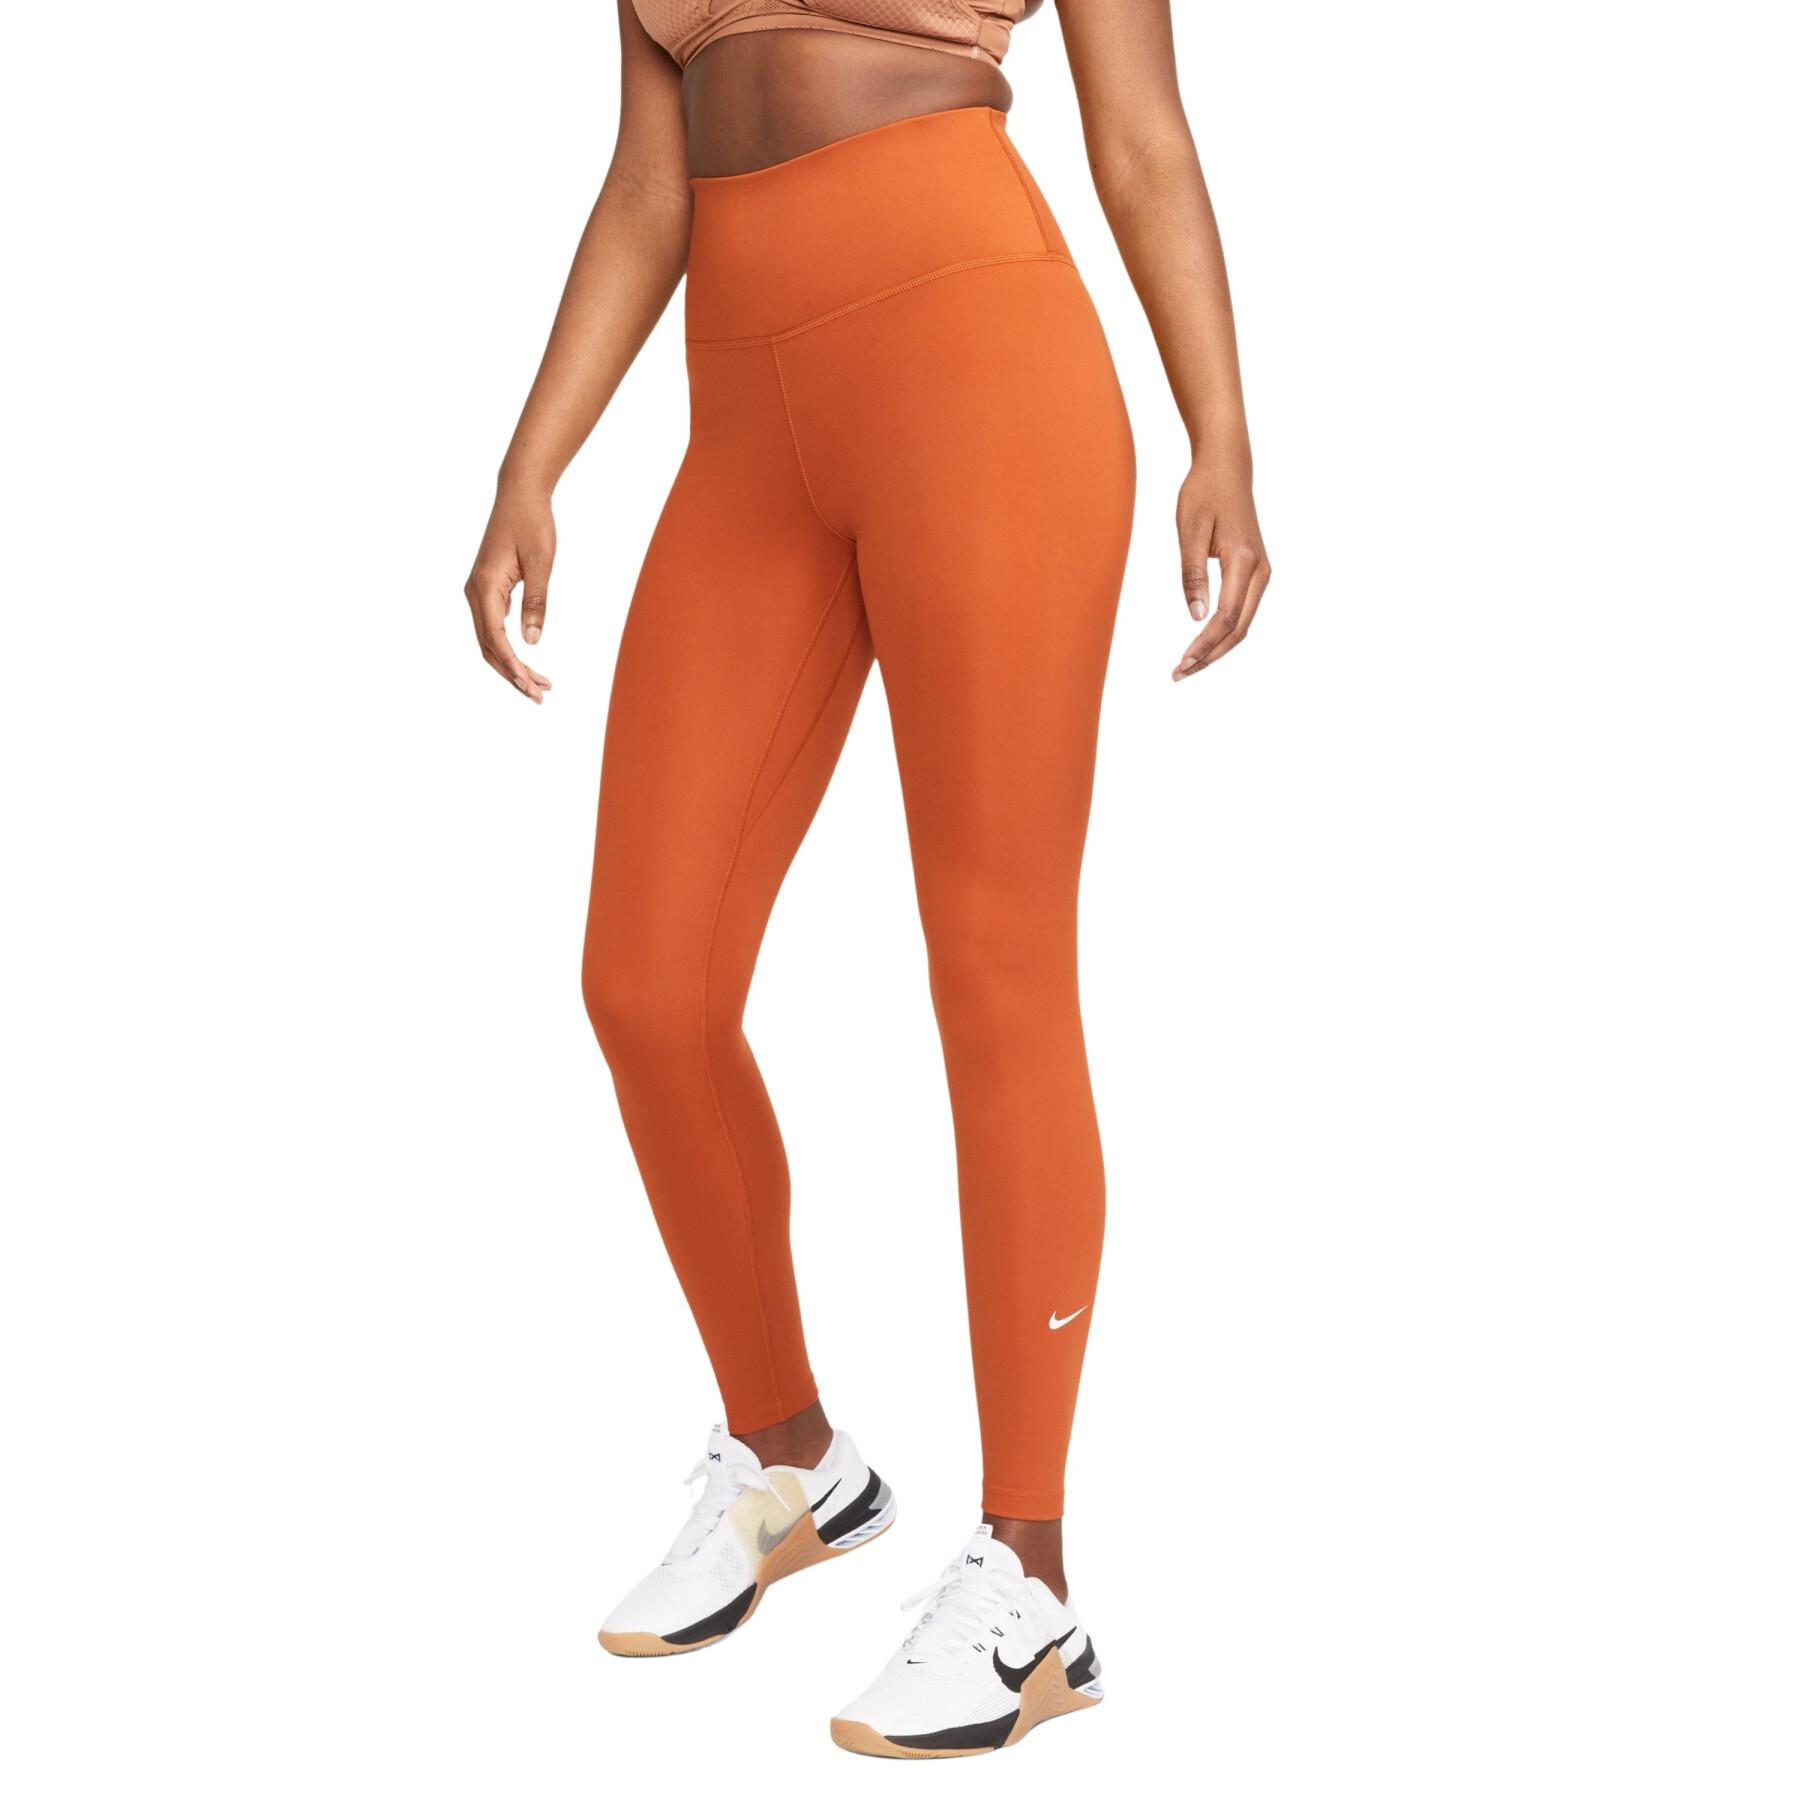 Legging high waist woman Nike One Dri-FIT - Leggings - Women's